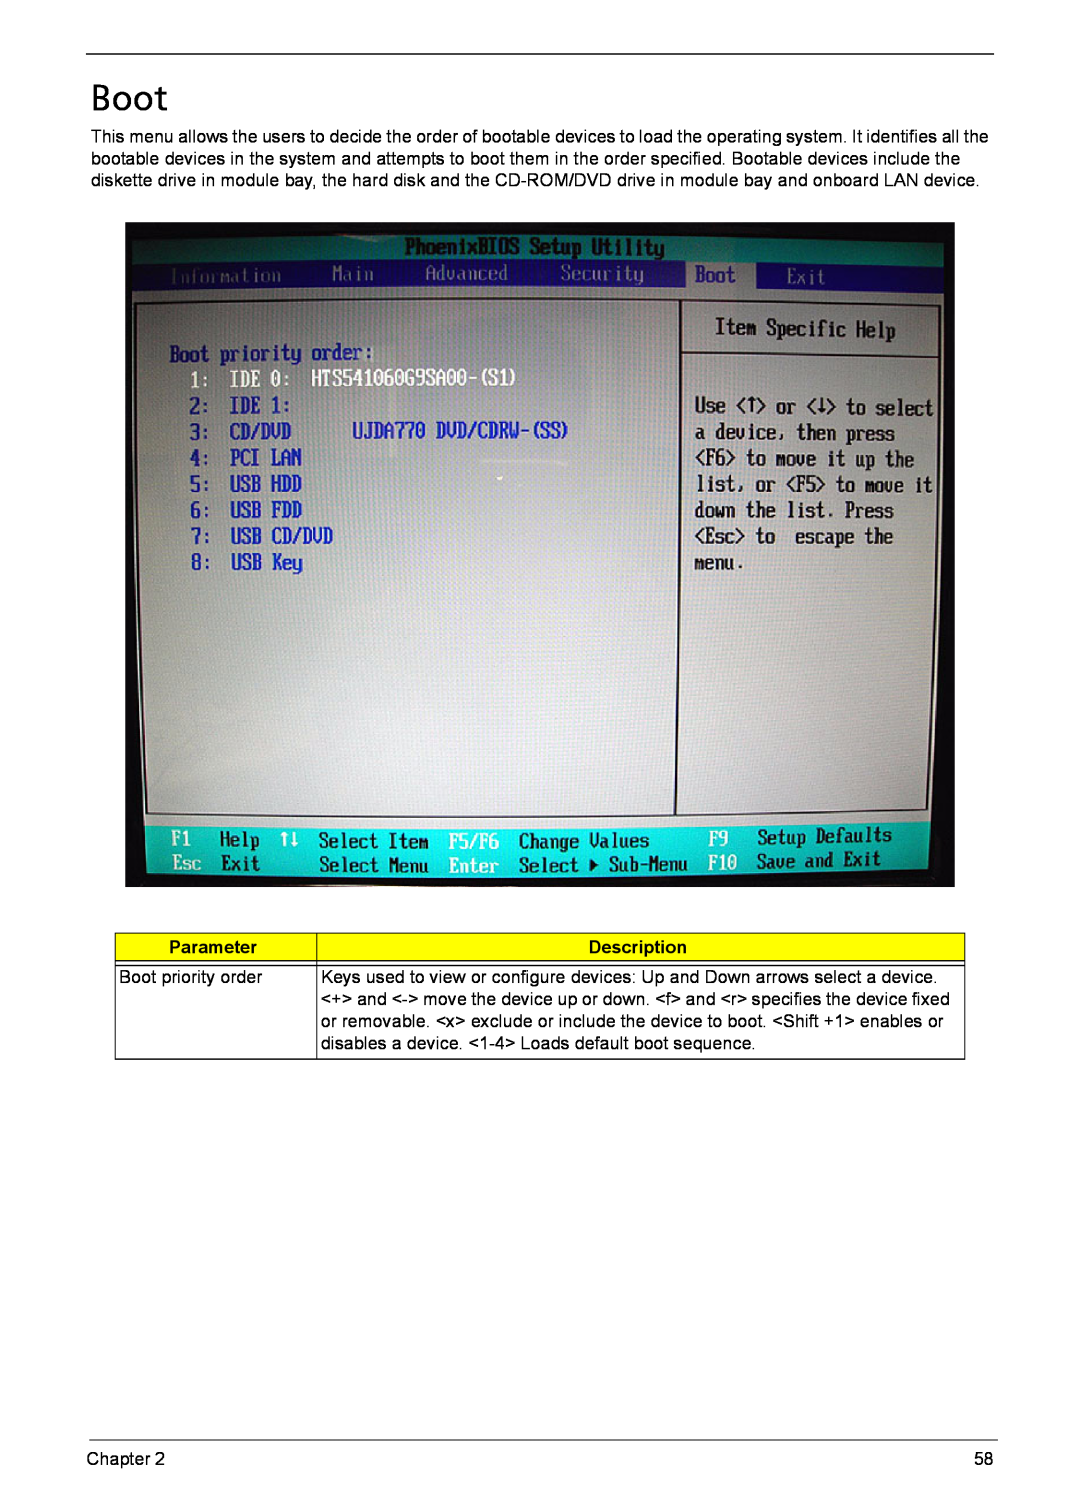 Acer 6410, 6460 manual Boot, Parameter, Description 